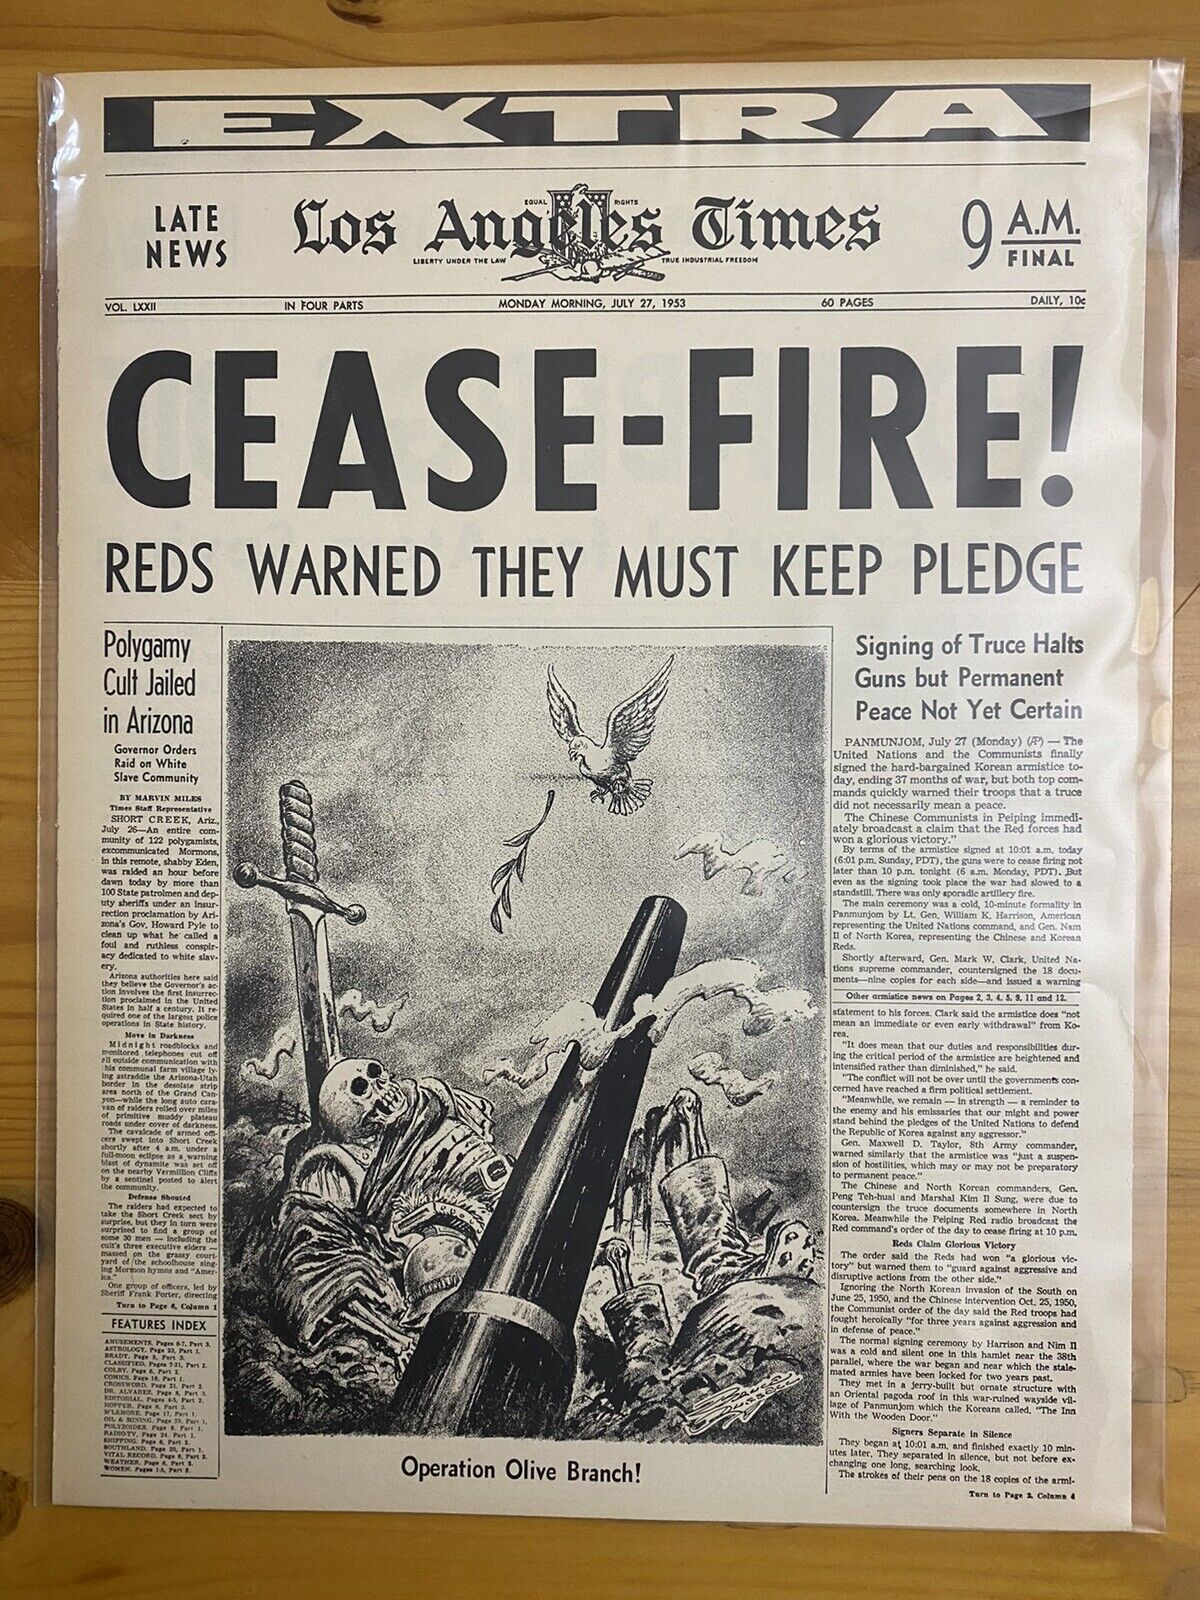 VINTAGE NEWSPAPER HEADLINE ~ KOREA ARMY BATTLE CEASE-FIRE~ KOREAN WAR ENDS 1953